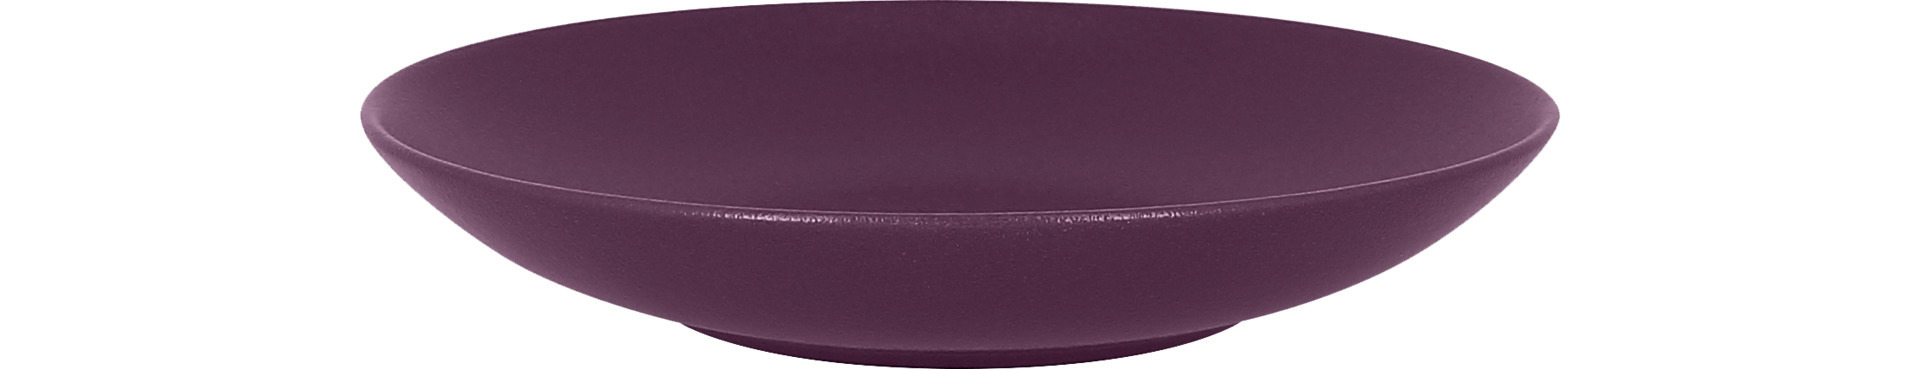 Coupteller tief 230 mm / 0,69 l plum-purple